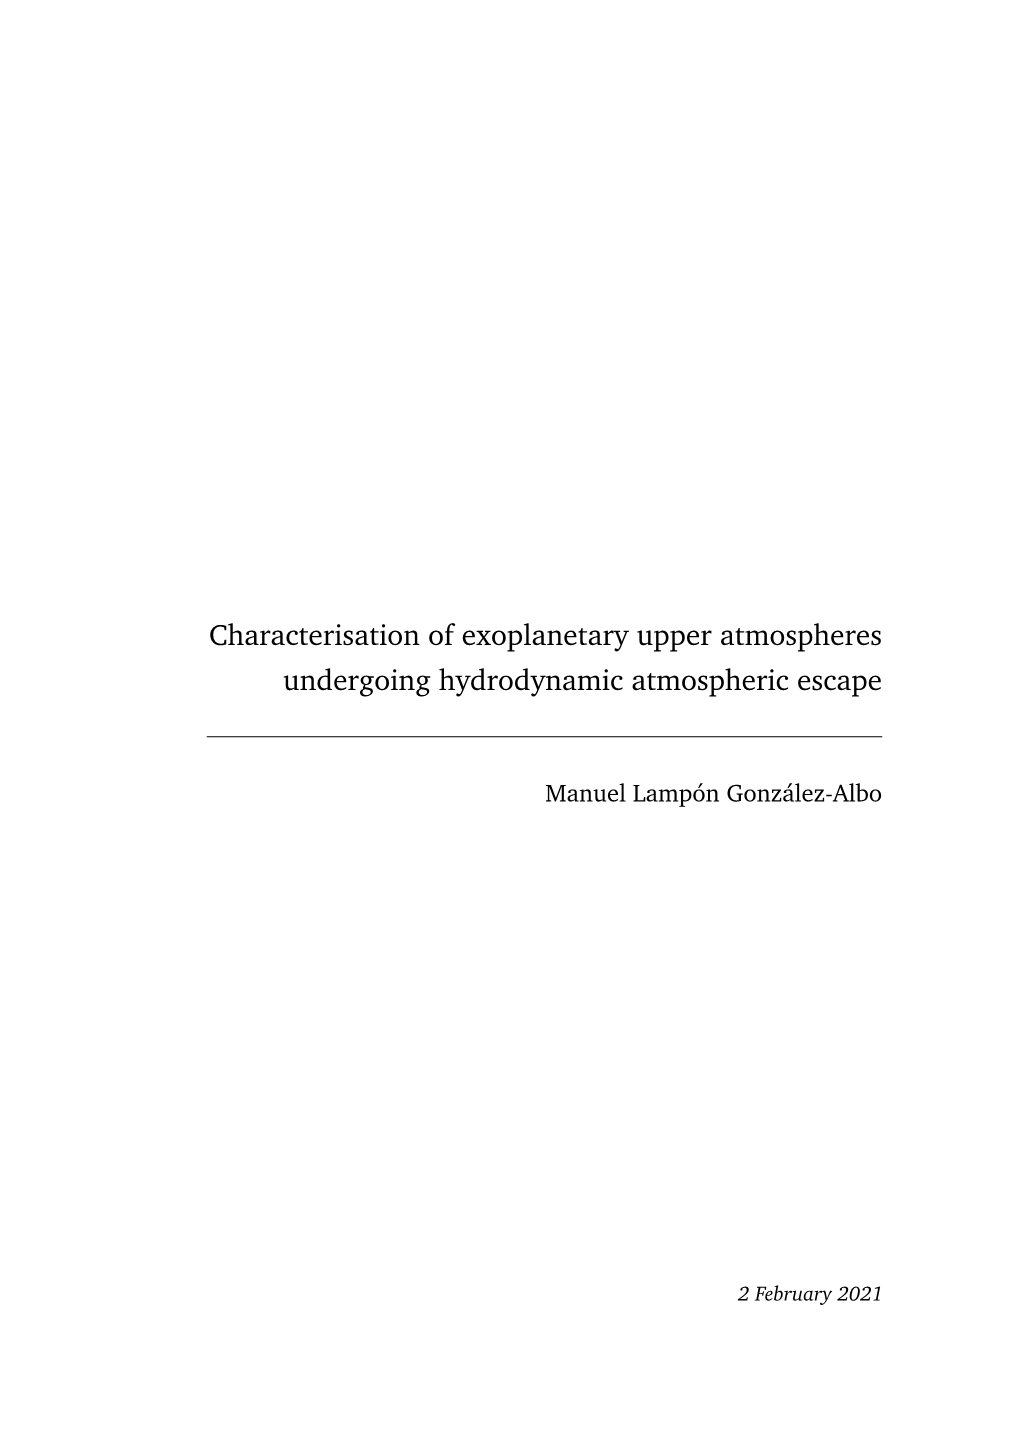 Characterisation of Exoplanetary Upper Atmospheres Undergoing Hydrodynamic Atmospheric Escape